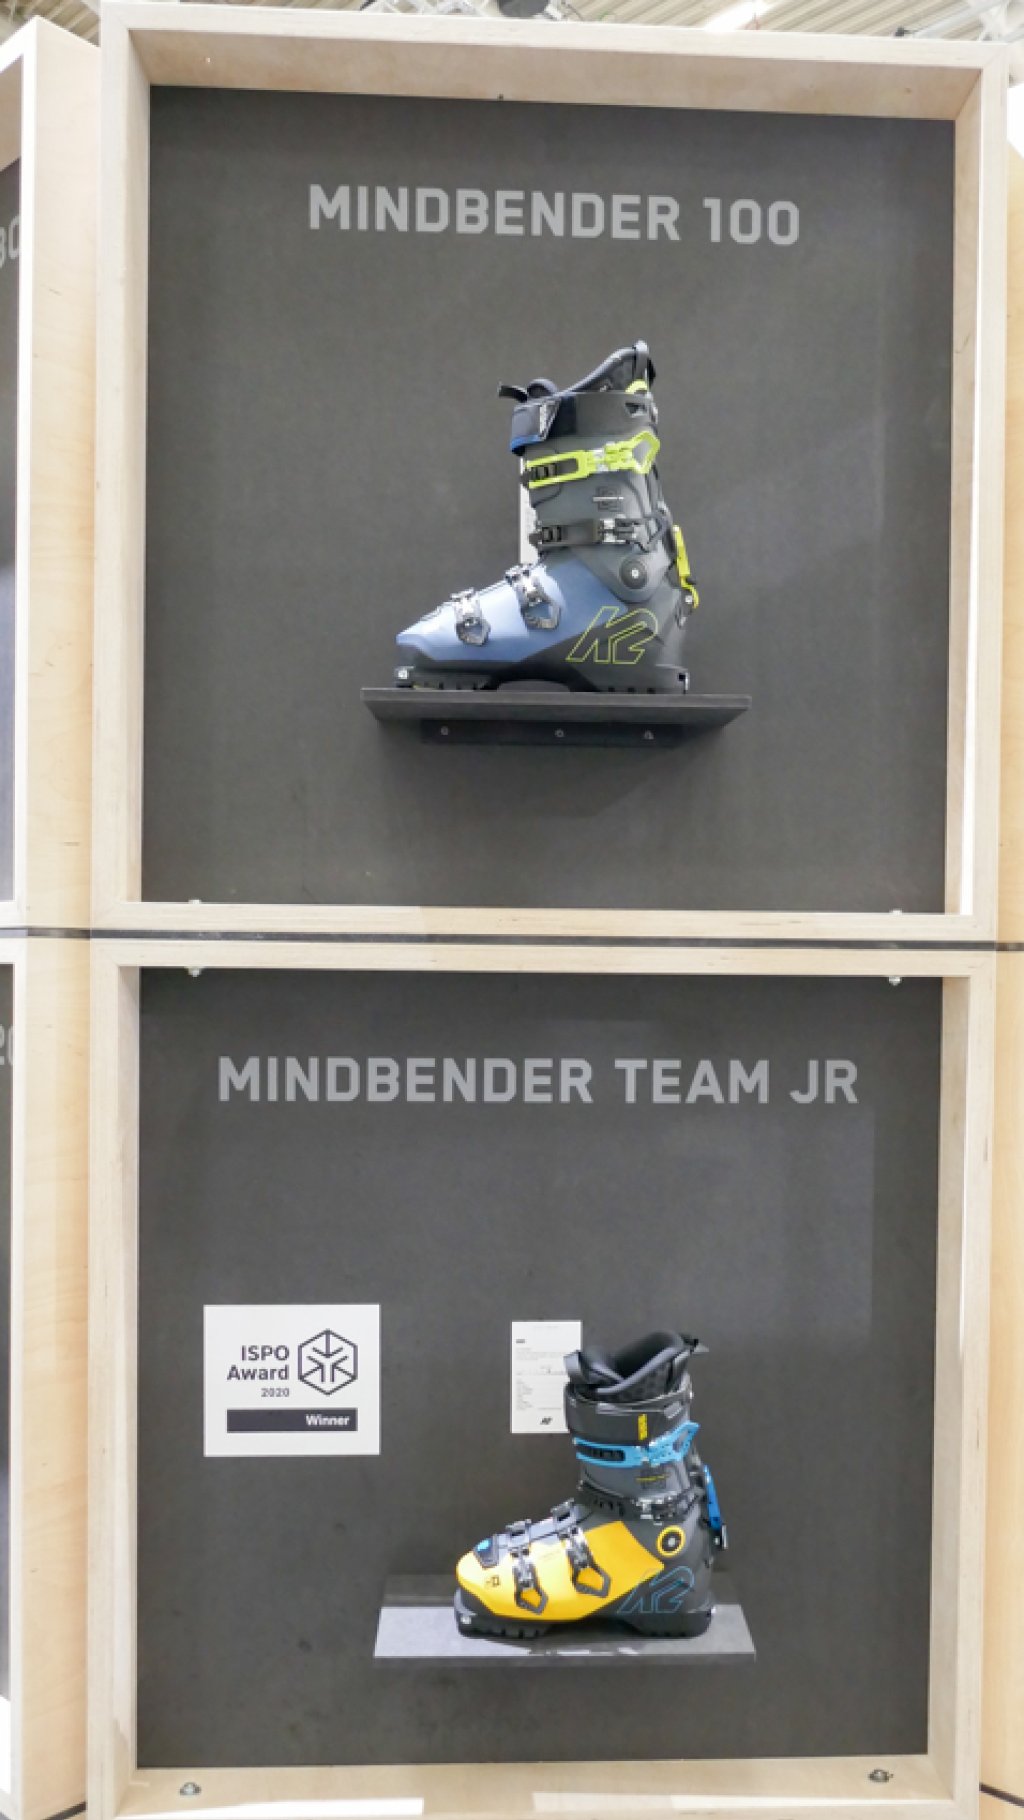 K2 Mindbender 100 and Mindbender Team JR, the ISPO Award Winner and youth shoe